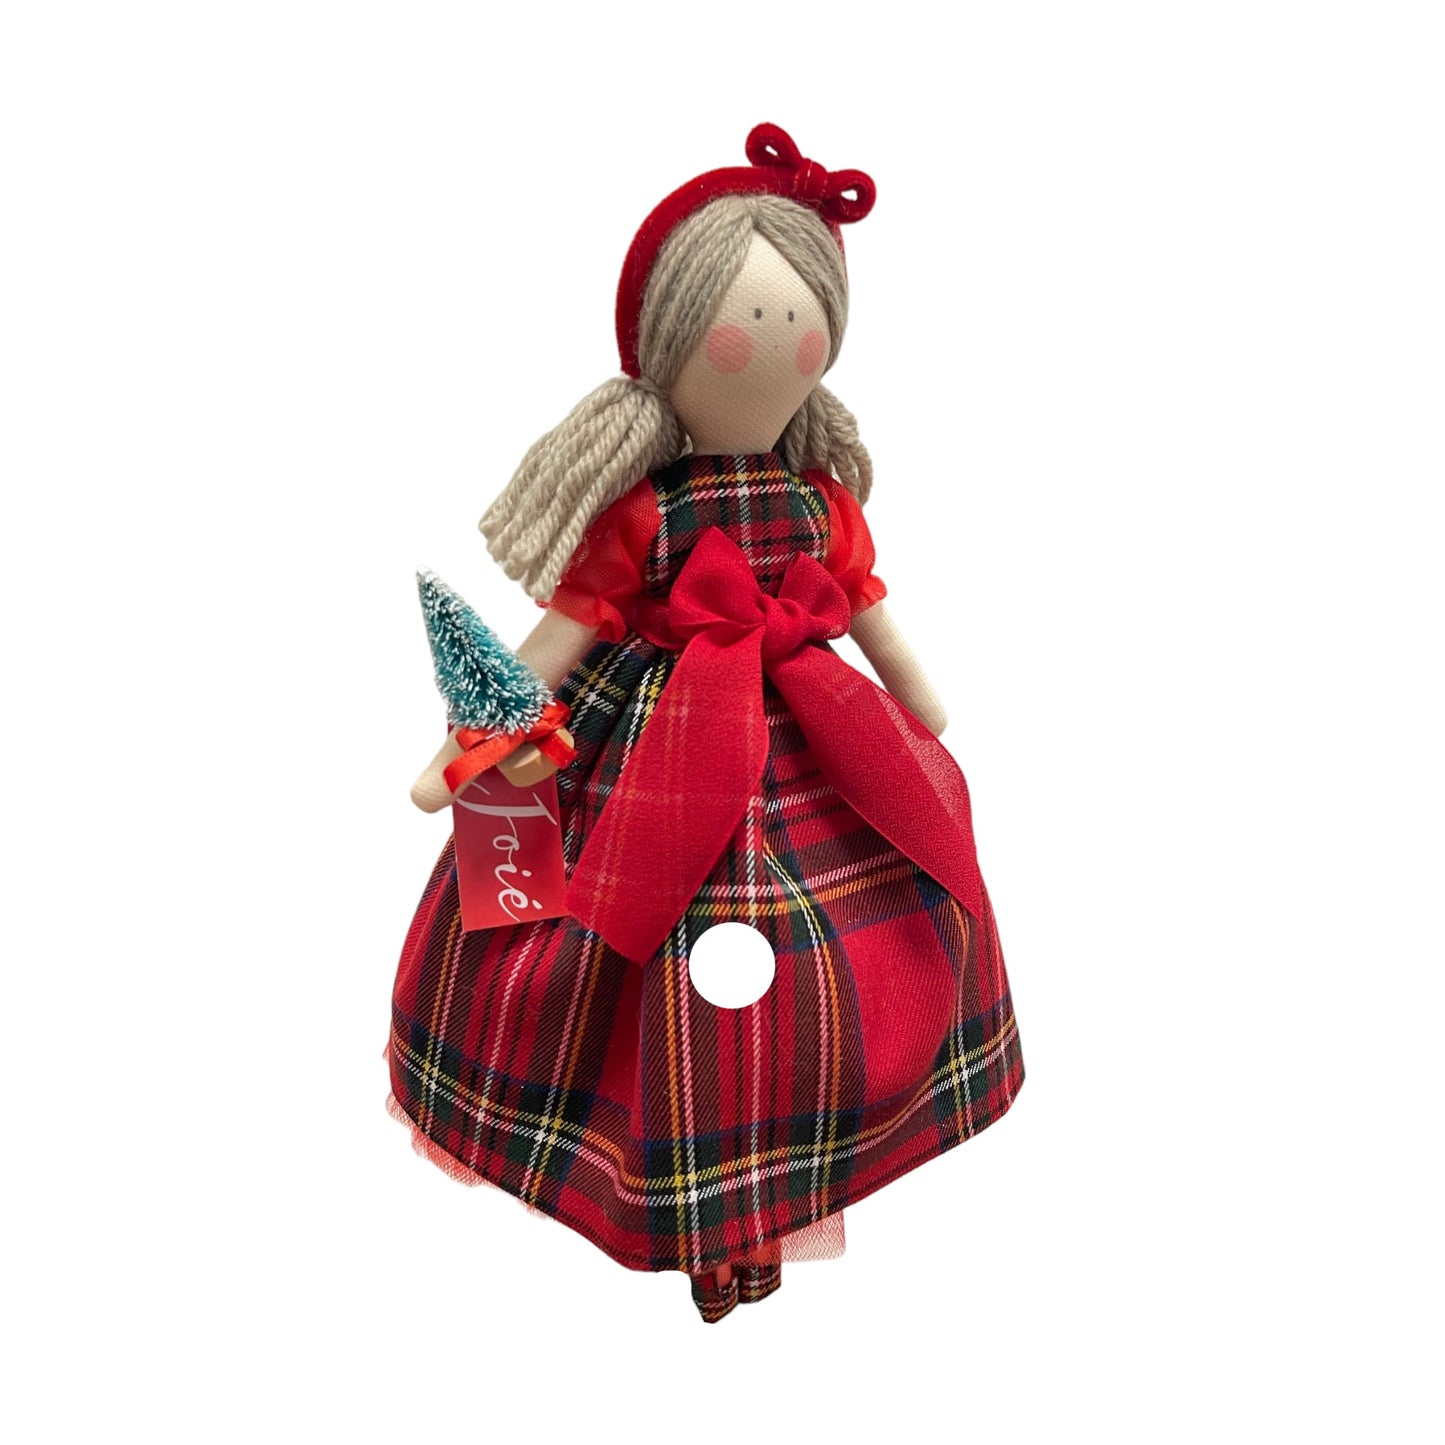 Bambola “Lilibet” in tartan - Bomboniere e idee regalo